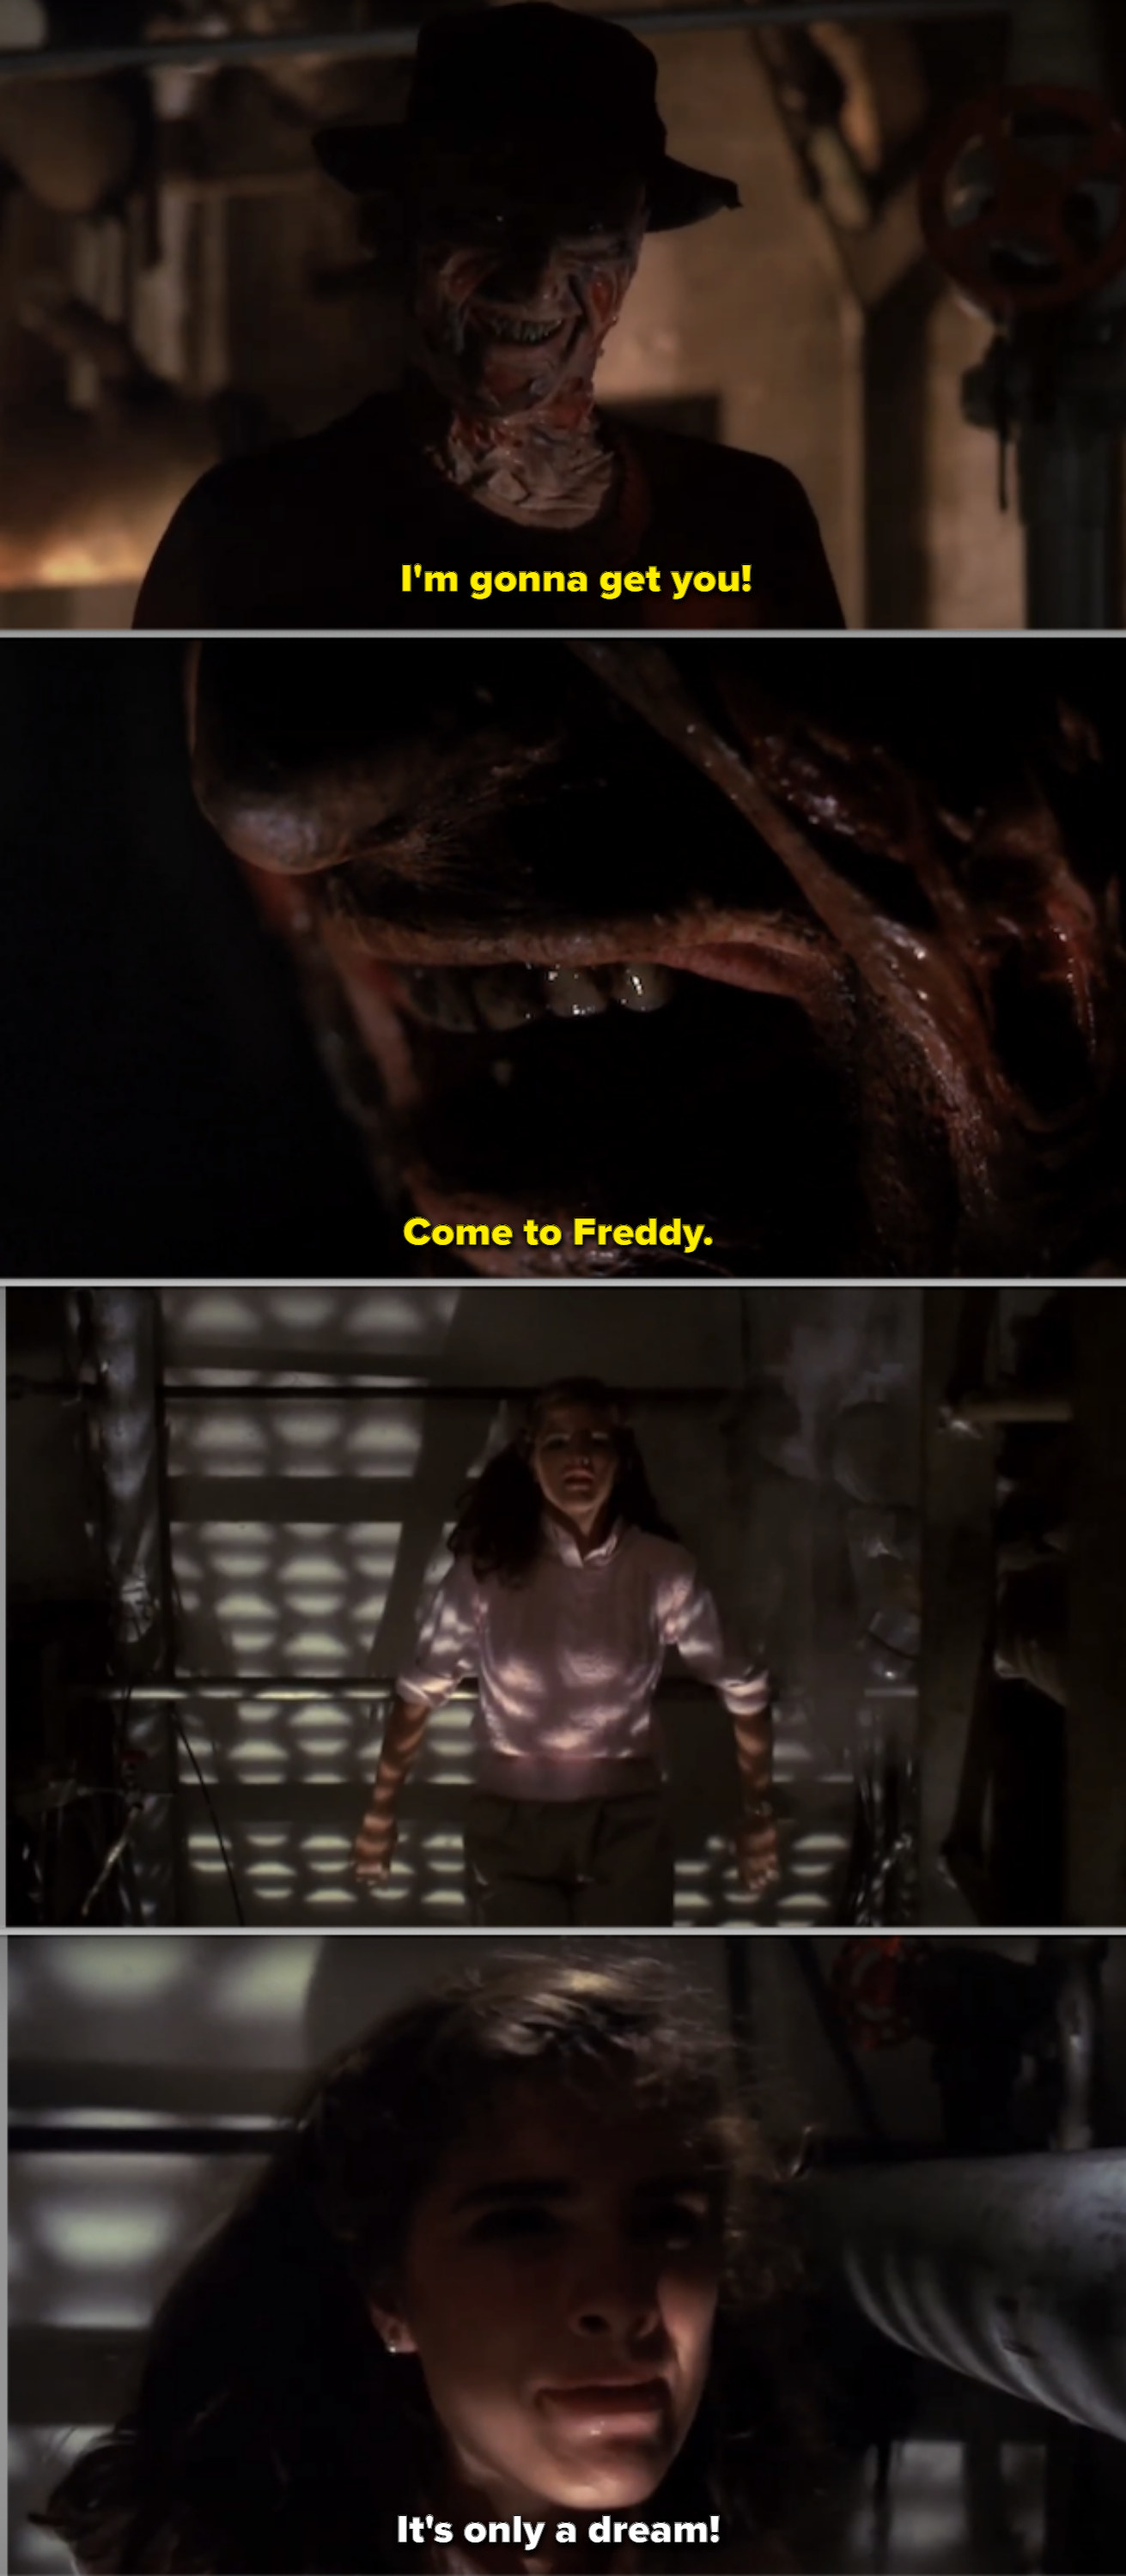 Freddy haunting people in their dreams